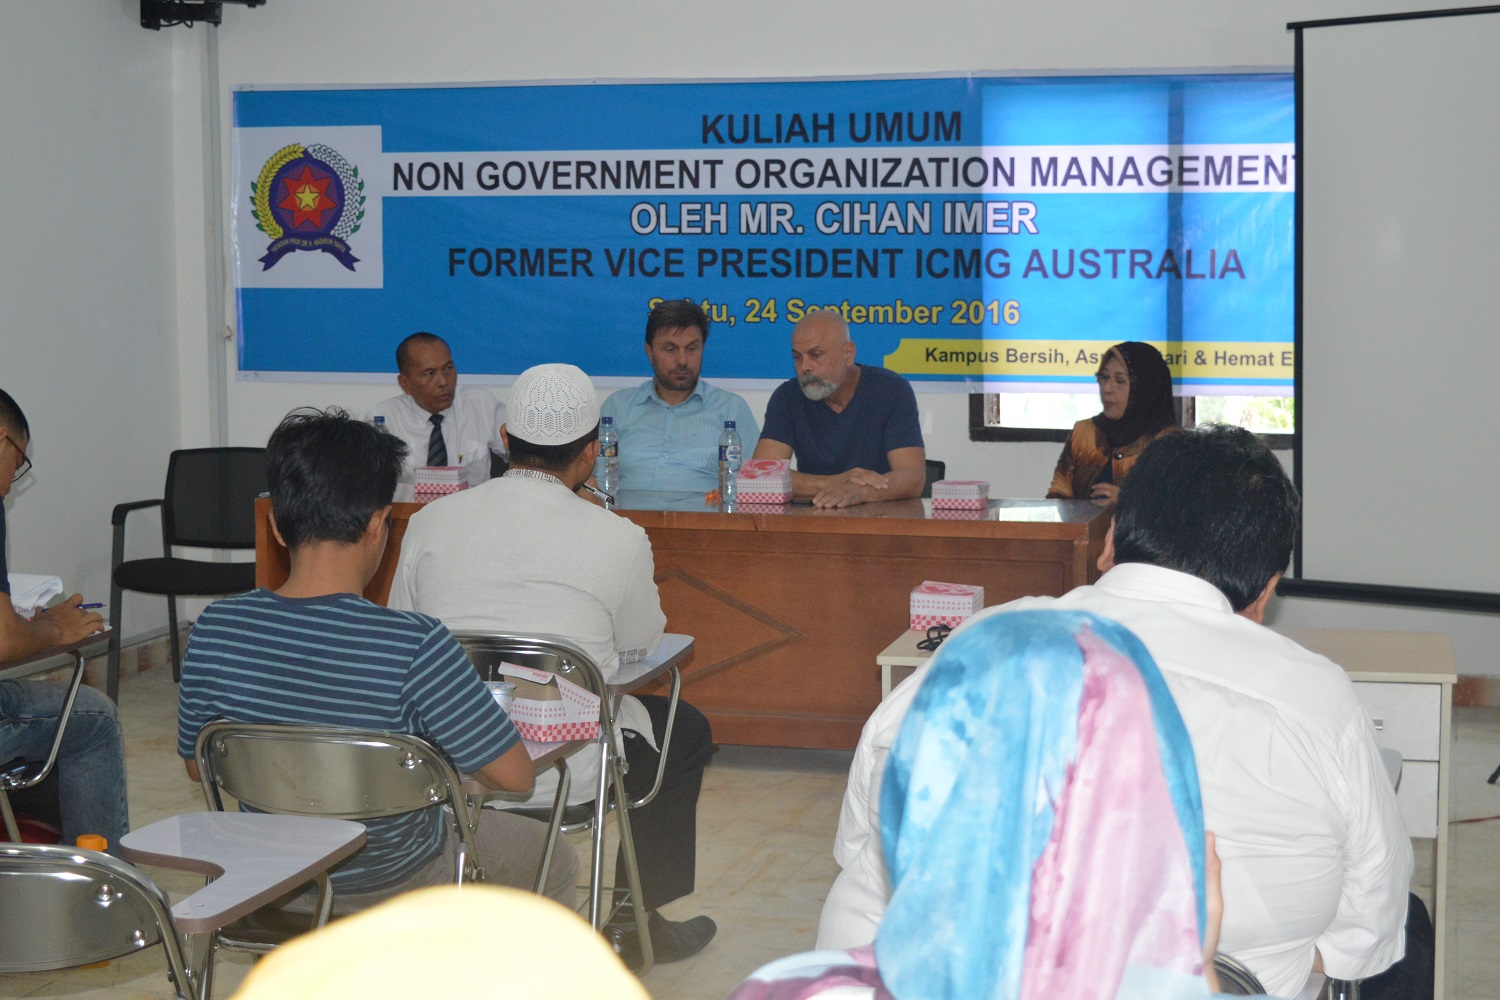 press-release-kuliah-tamu-non-government-organization-by-mr-cihan-imer_80.jpg